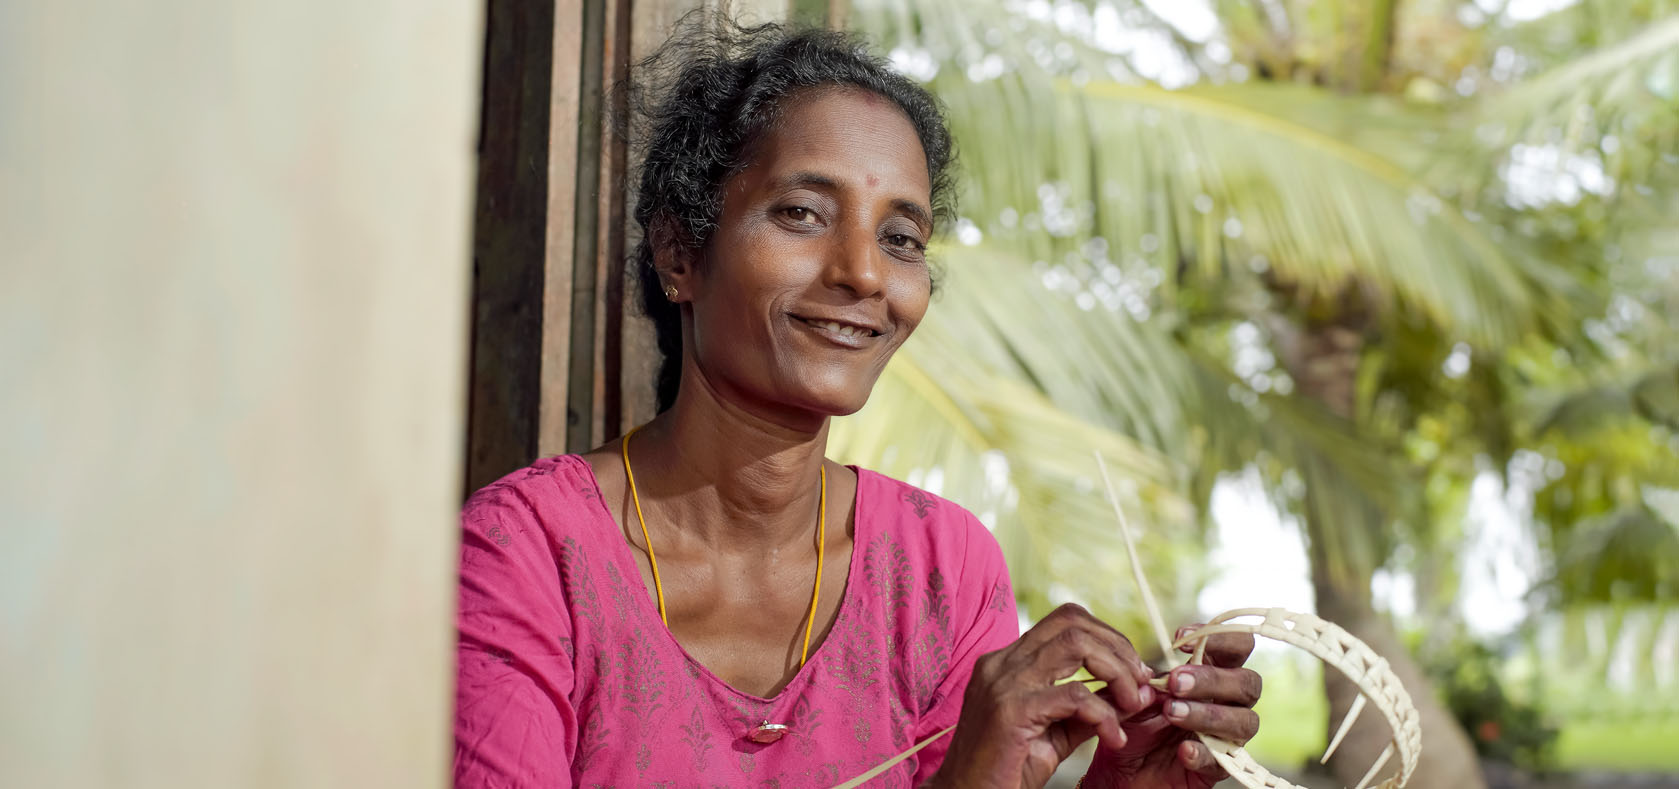 Gnanasegaram Rangithakaladevi, 41 from palmyra in Mannar District. Photo: UN Women Sri Lanka/Raveendra Rohana